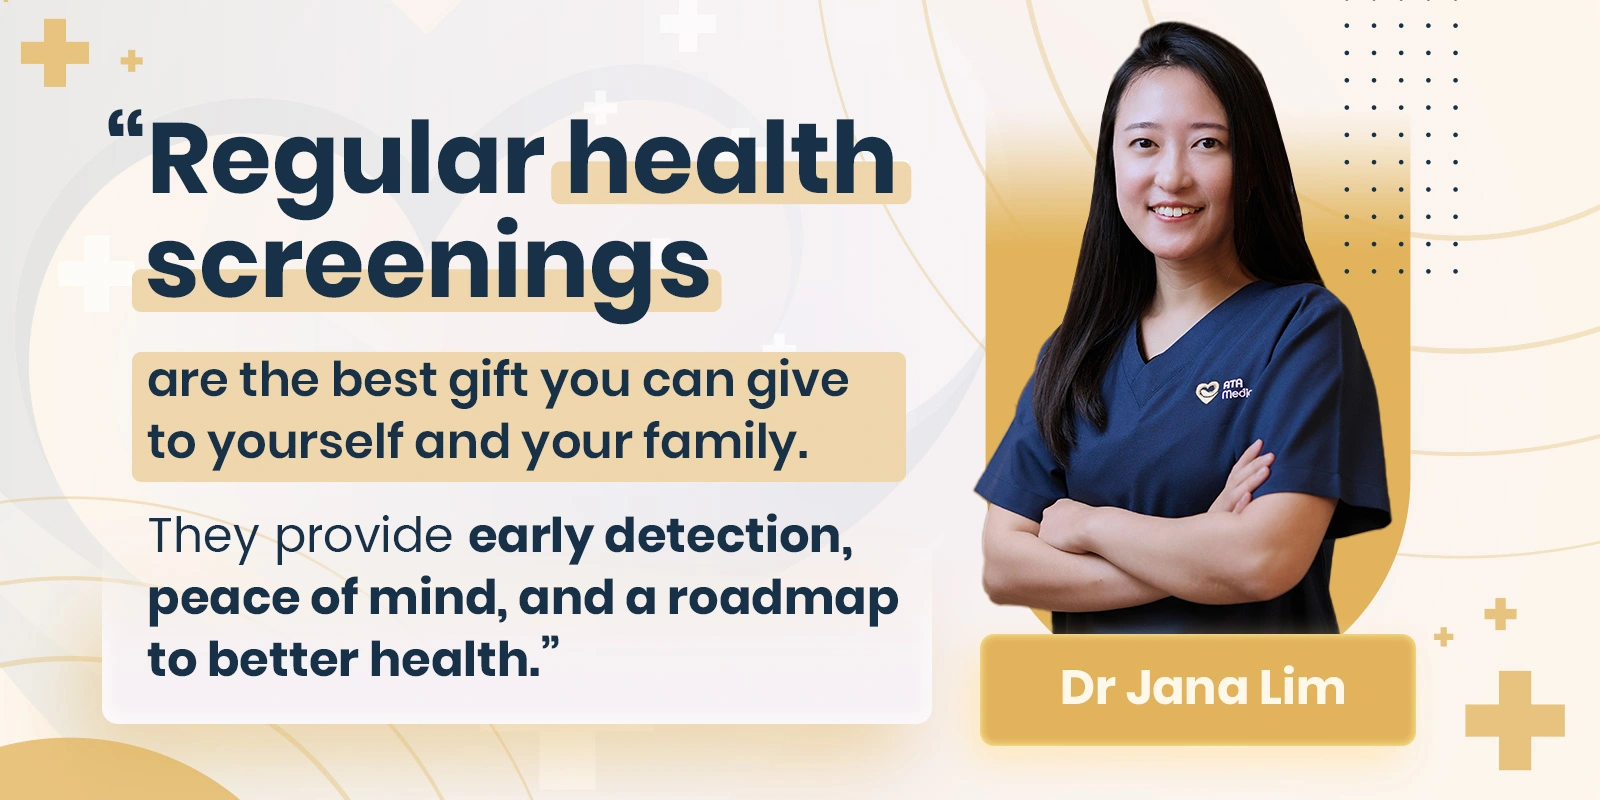 Dr Jana Lim: Regular health screening is important in Singapore.